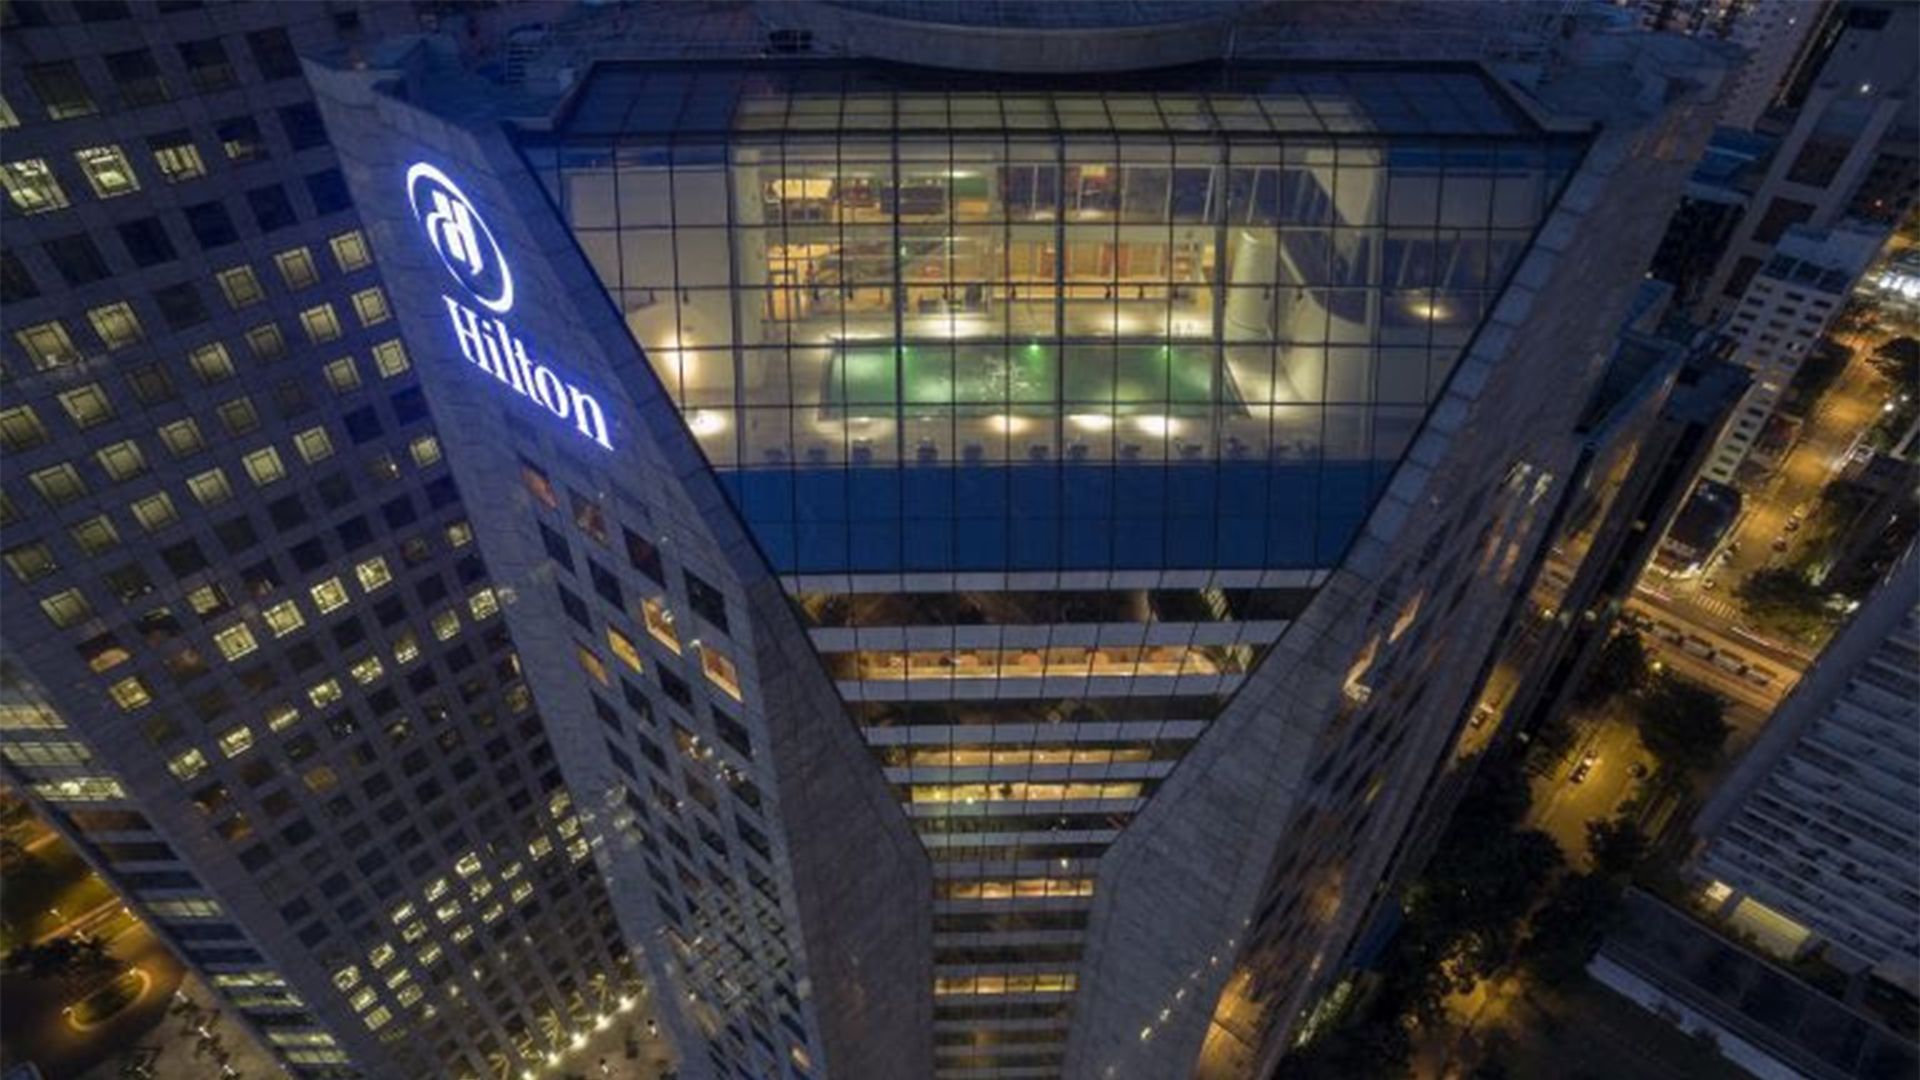 Hilton São Paulo Morumbi